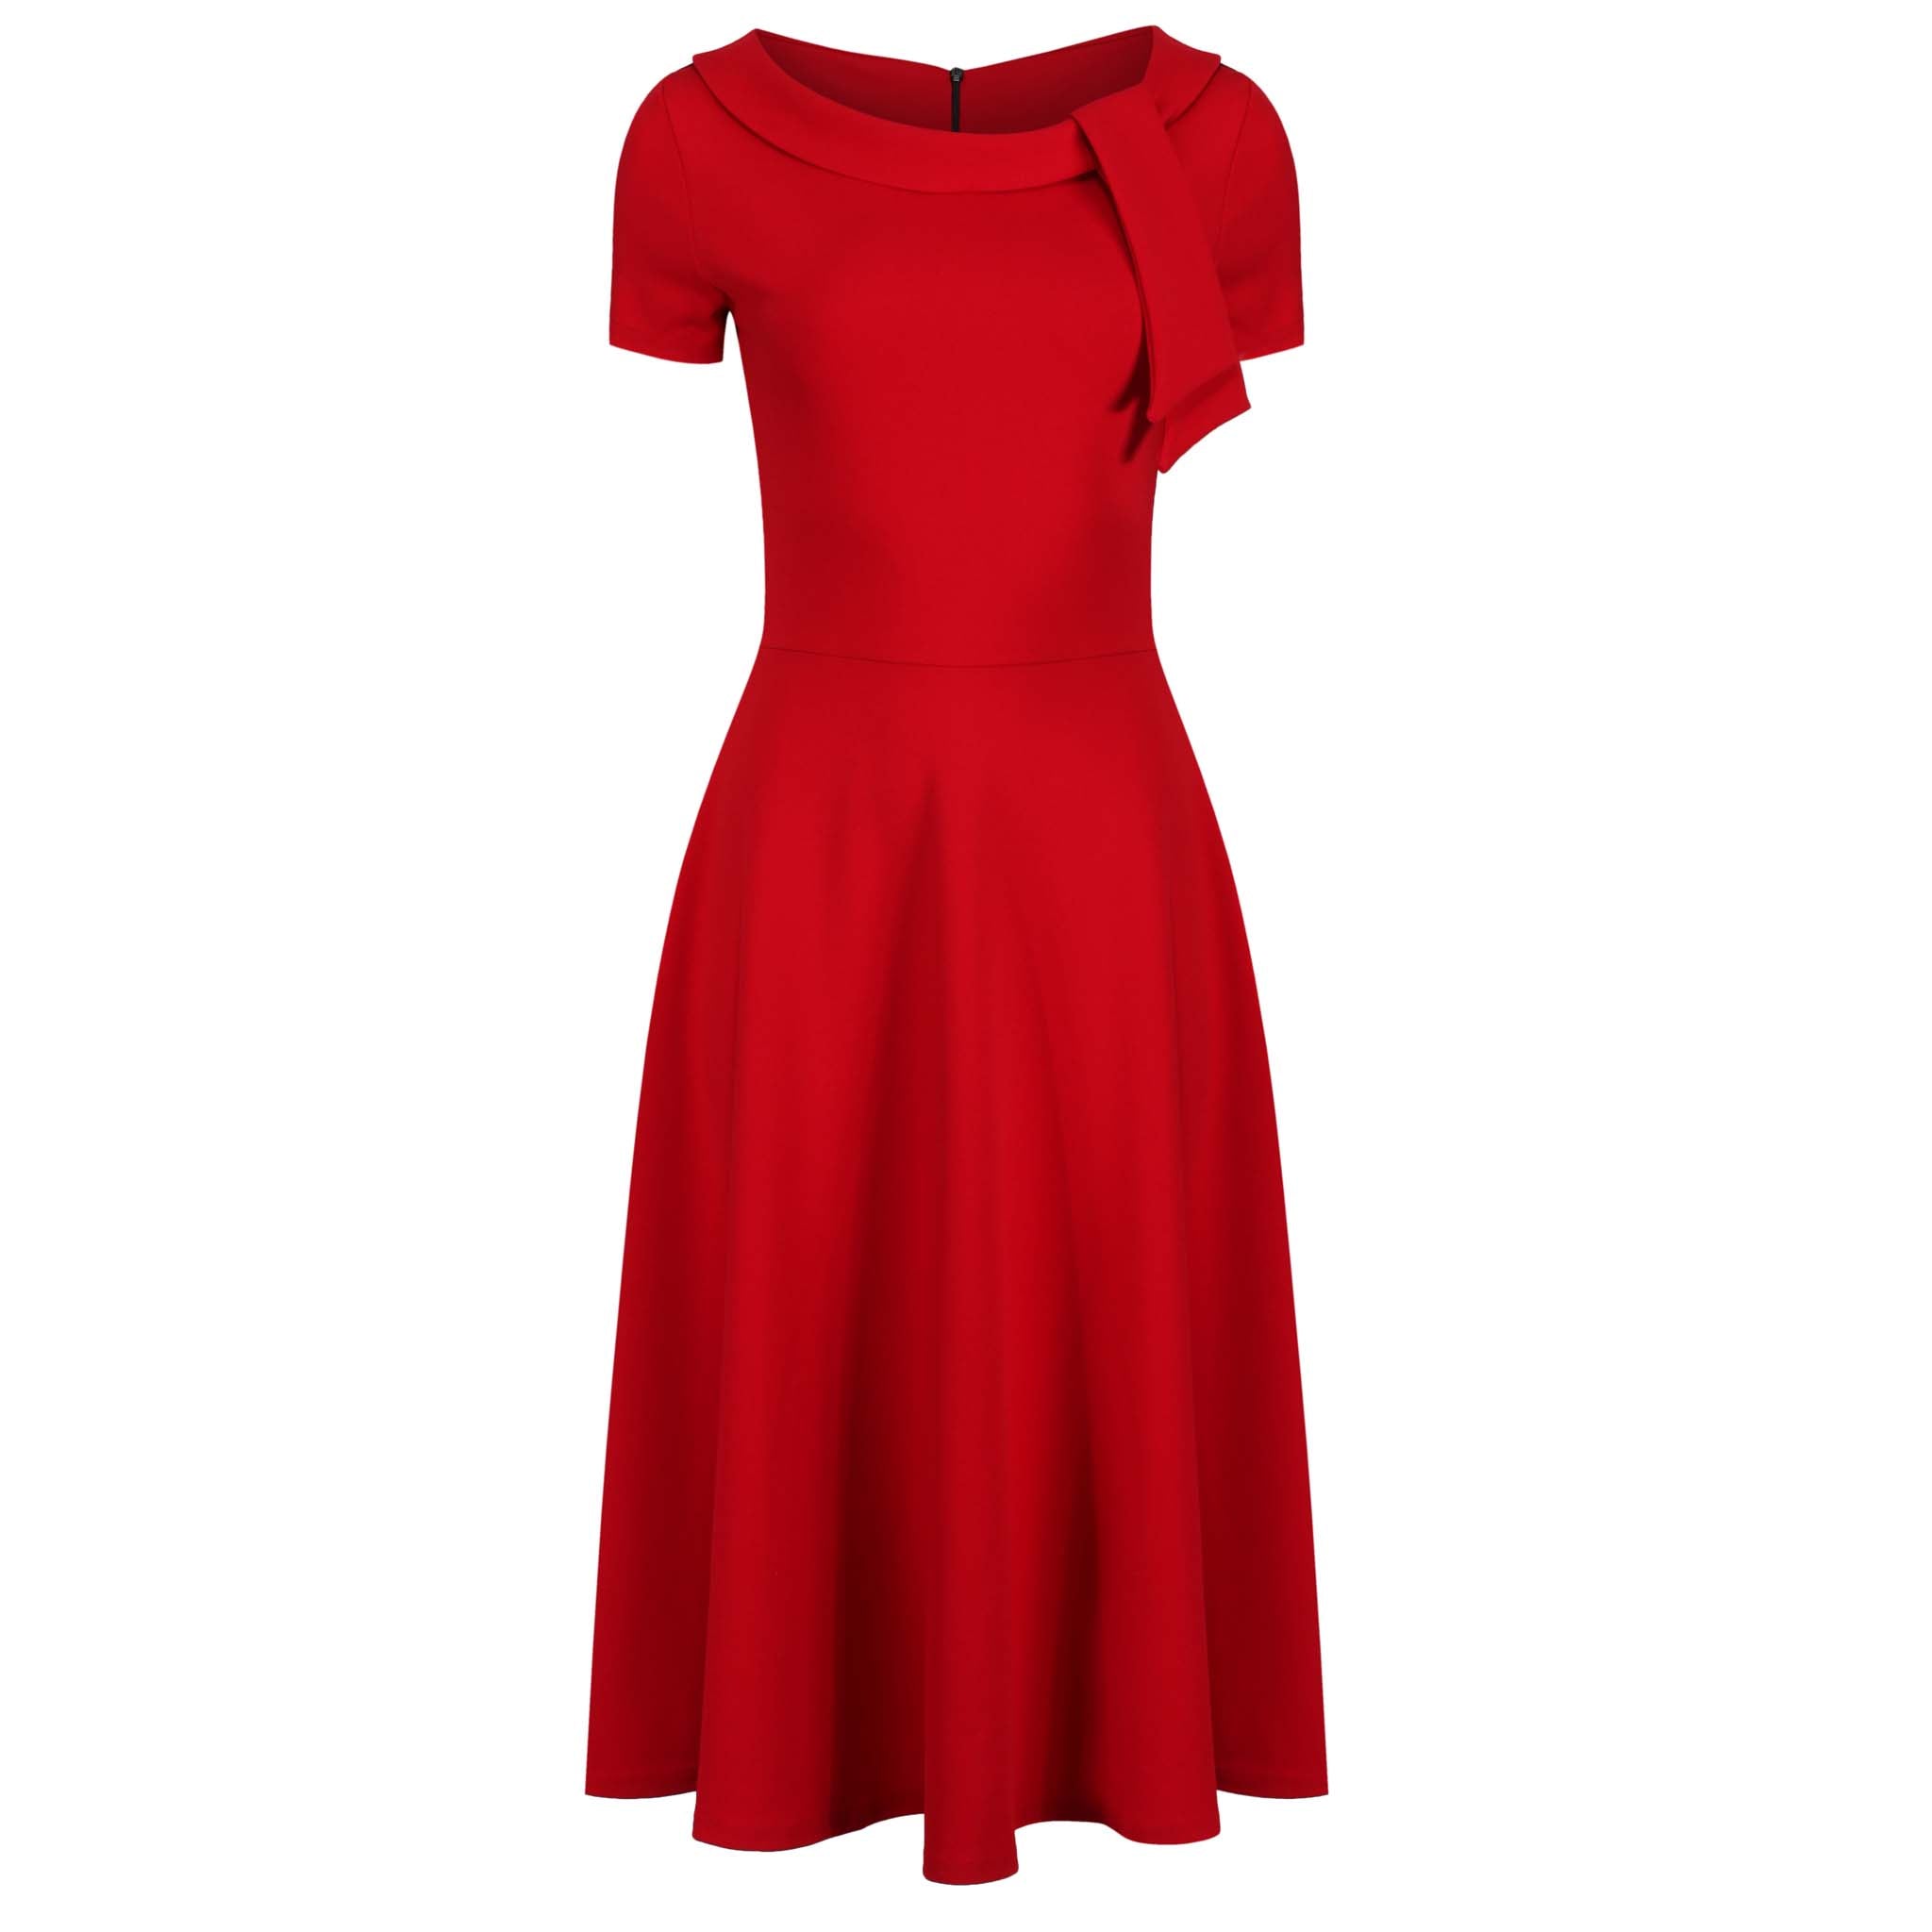 Red Neck Tie Short Sleeve Vintage Swing Dress